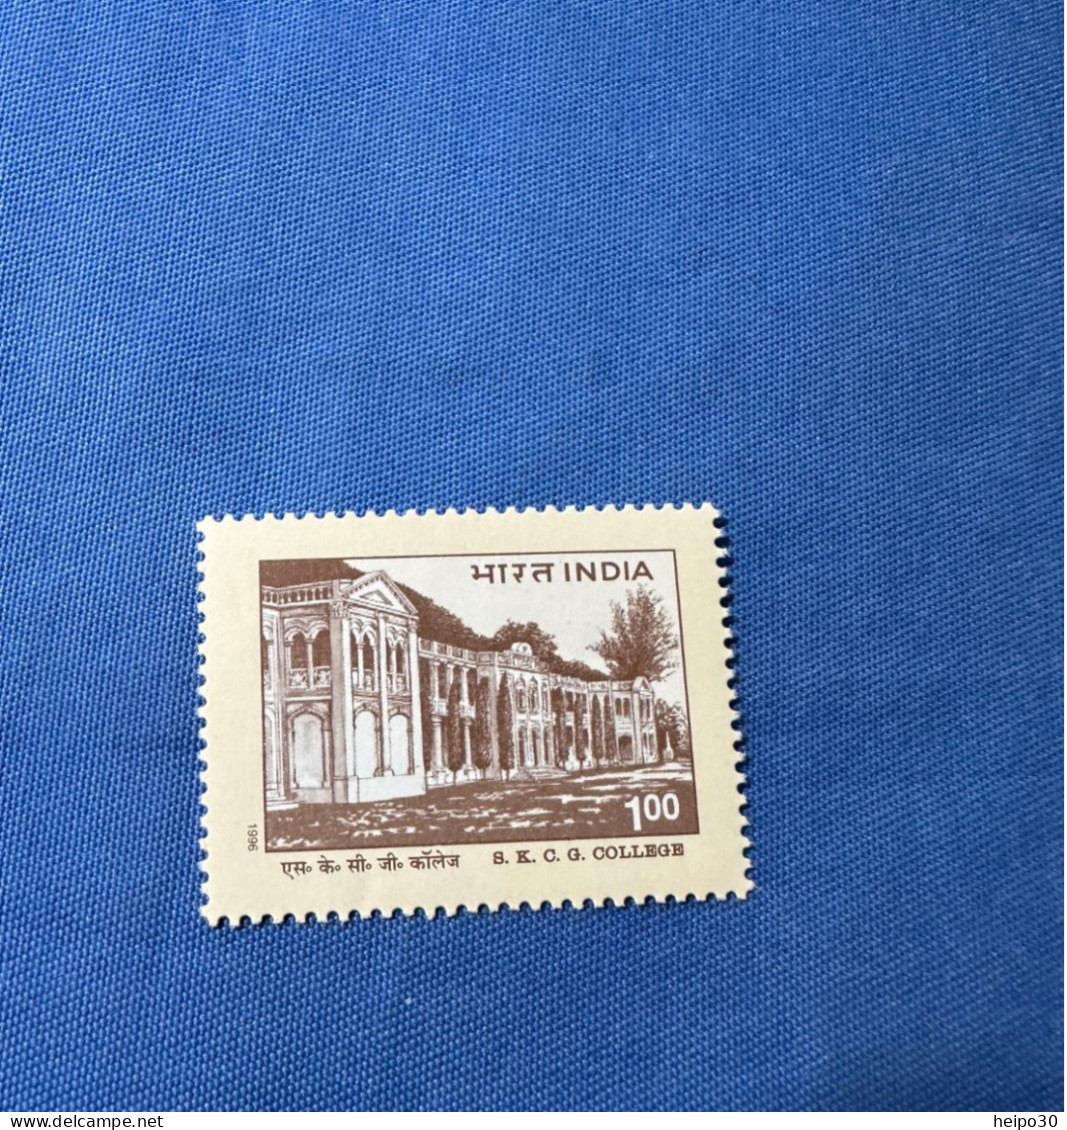 India 1996 Michel 1505 S.K.C.G. College MNH - Unused Stamps